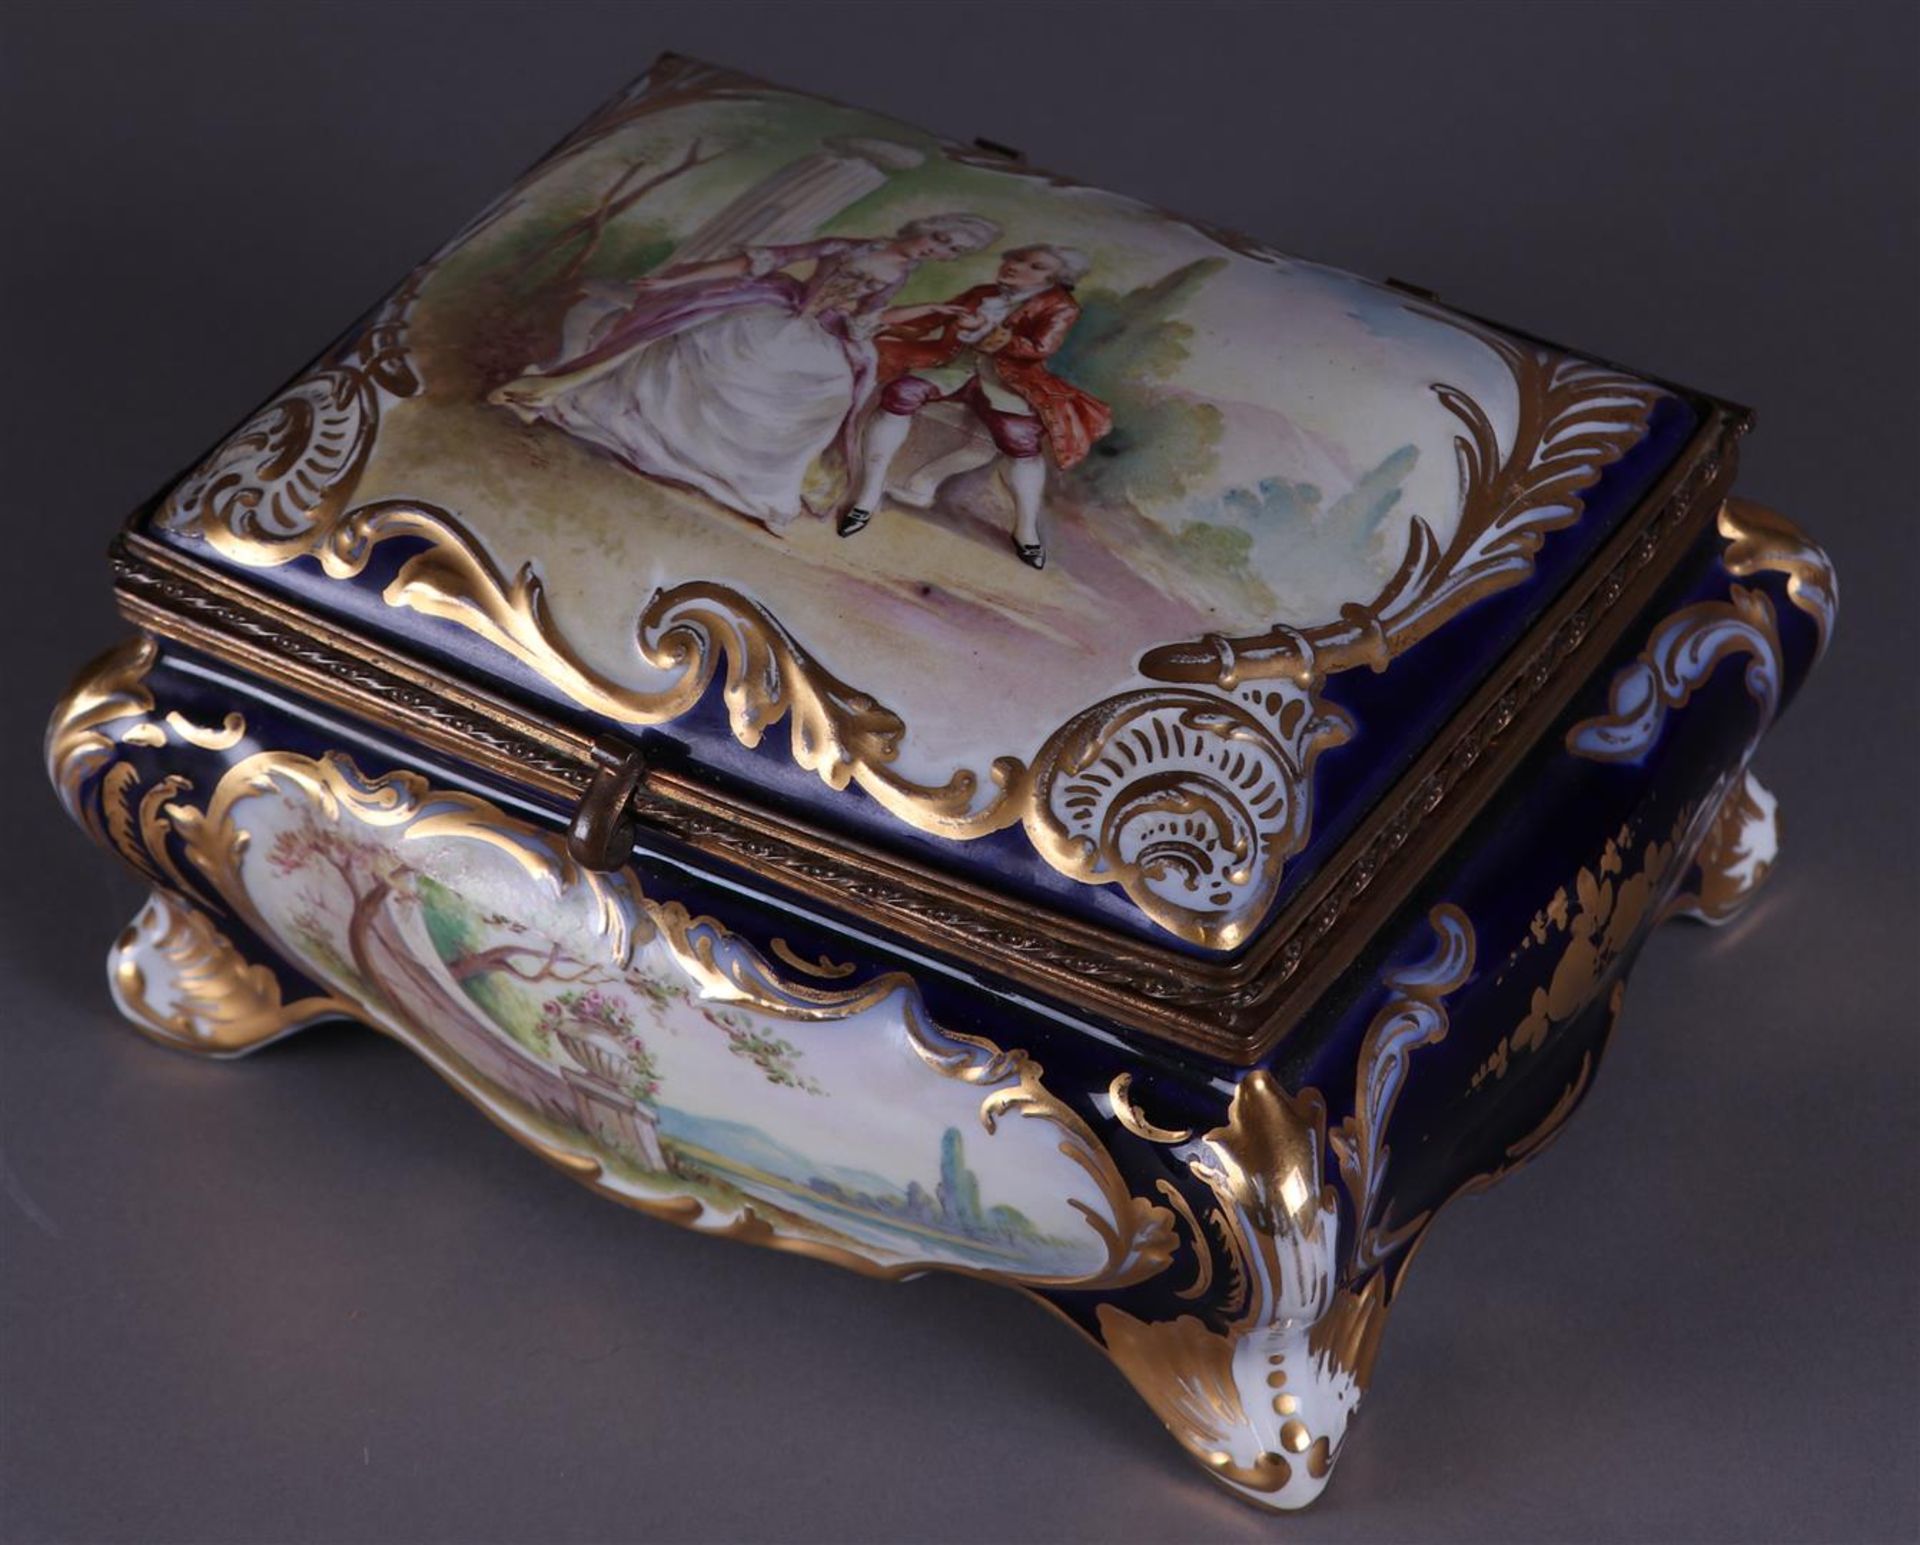 A porcelain lidded box with a romantic scene. France, ca. 1900